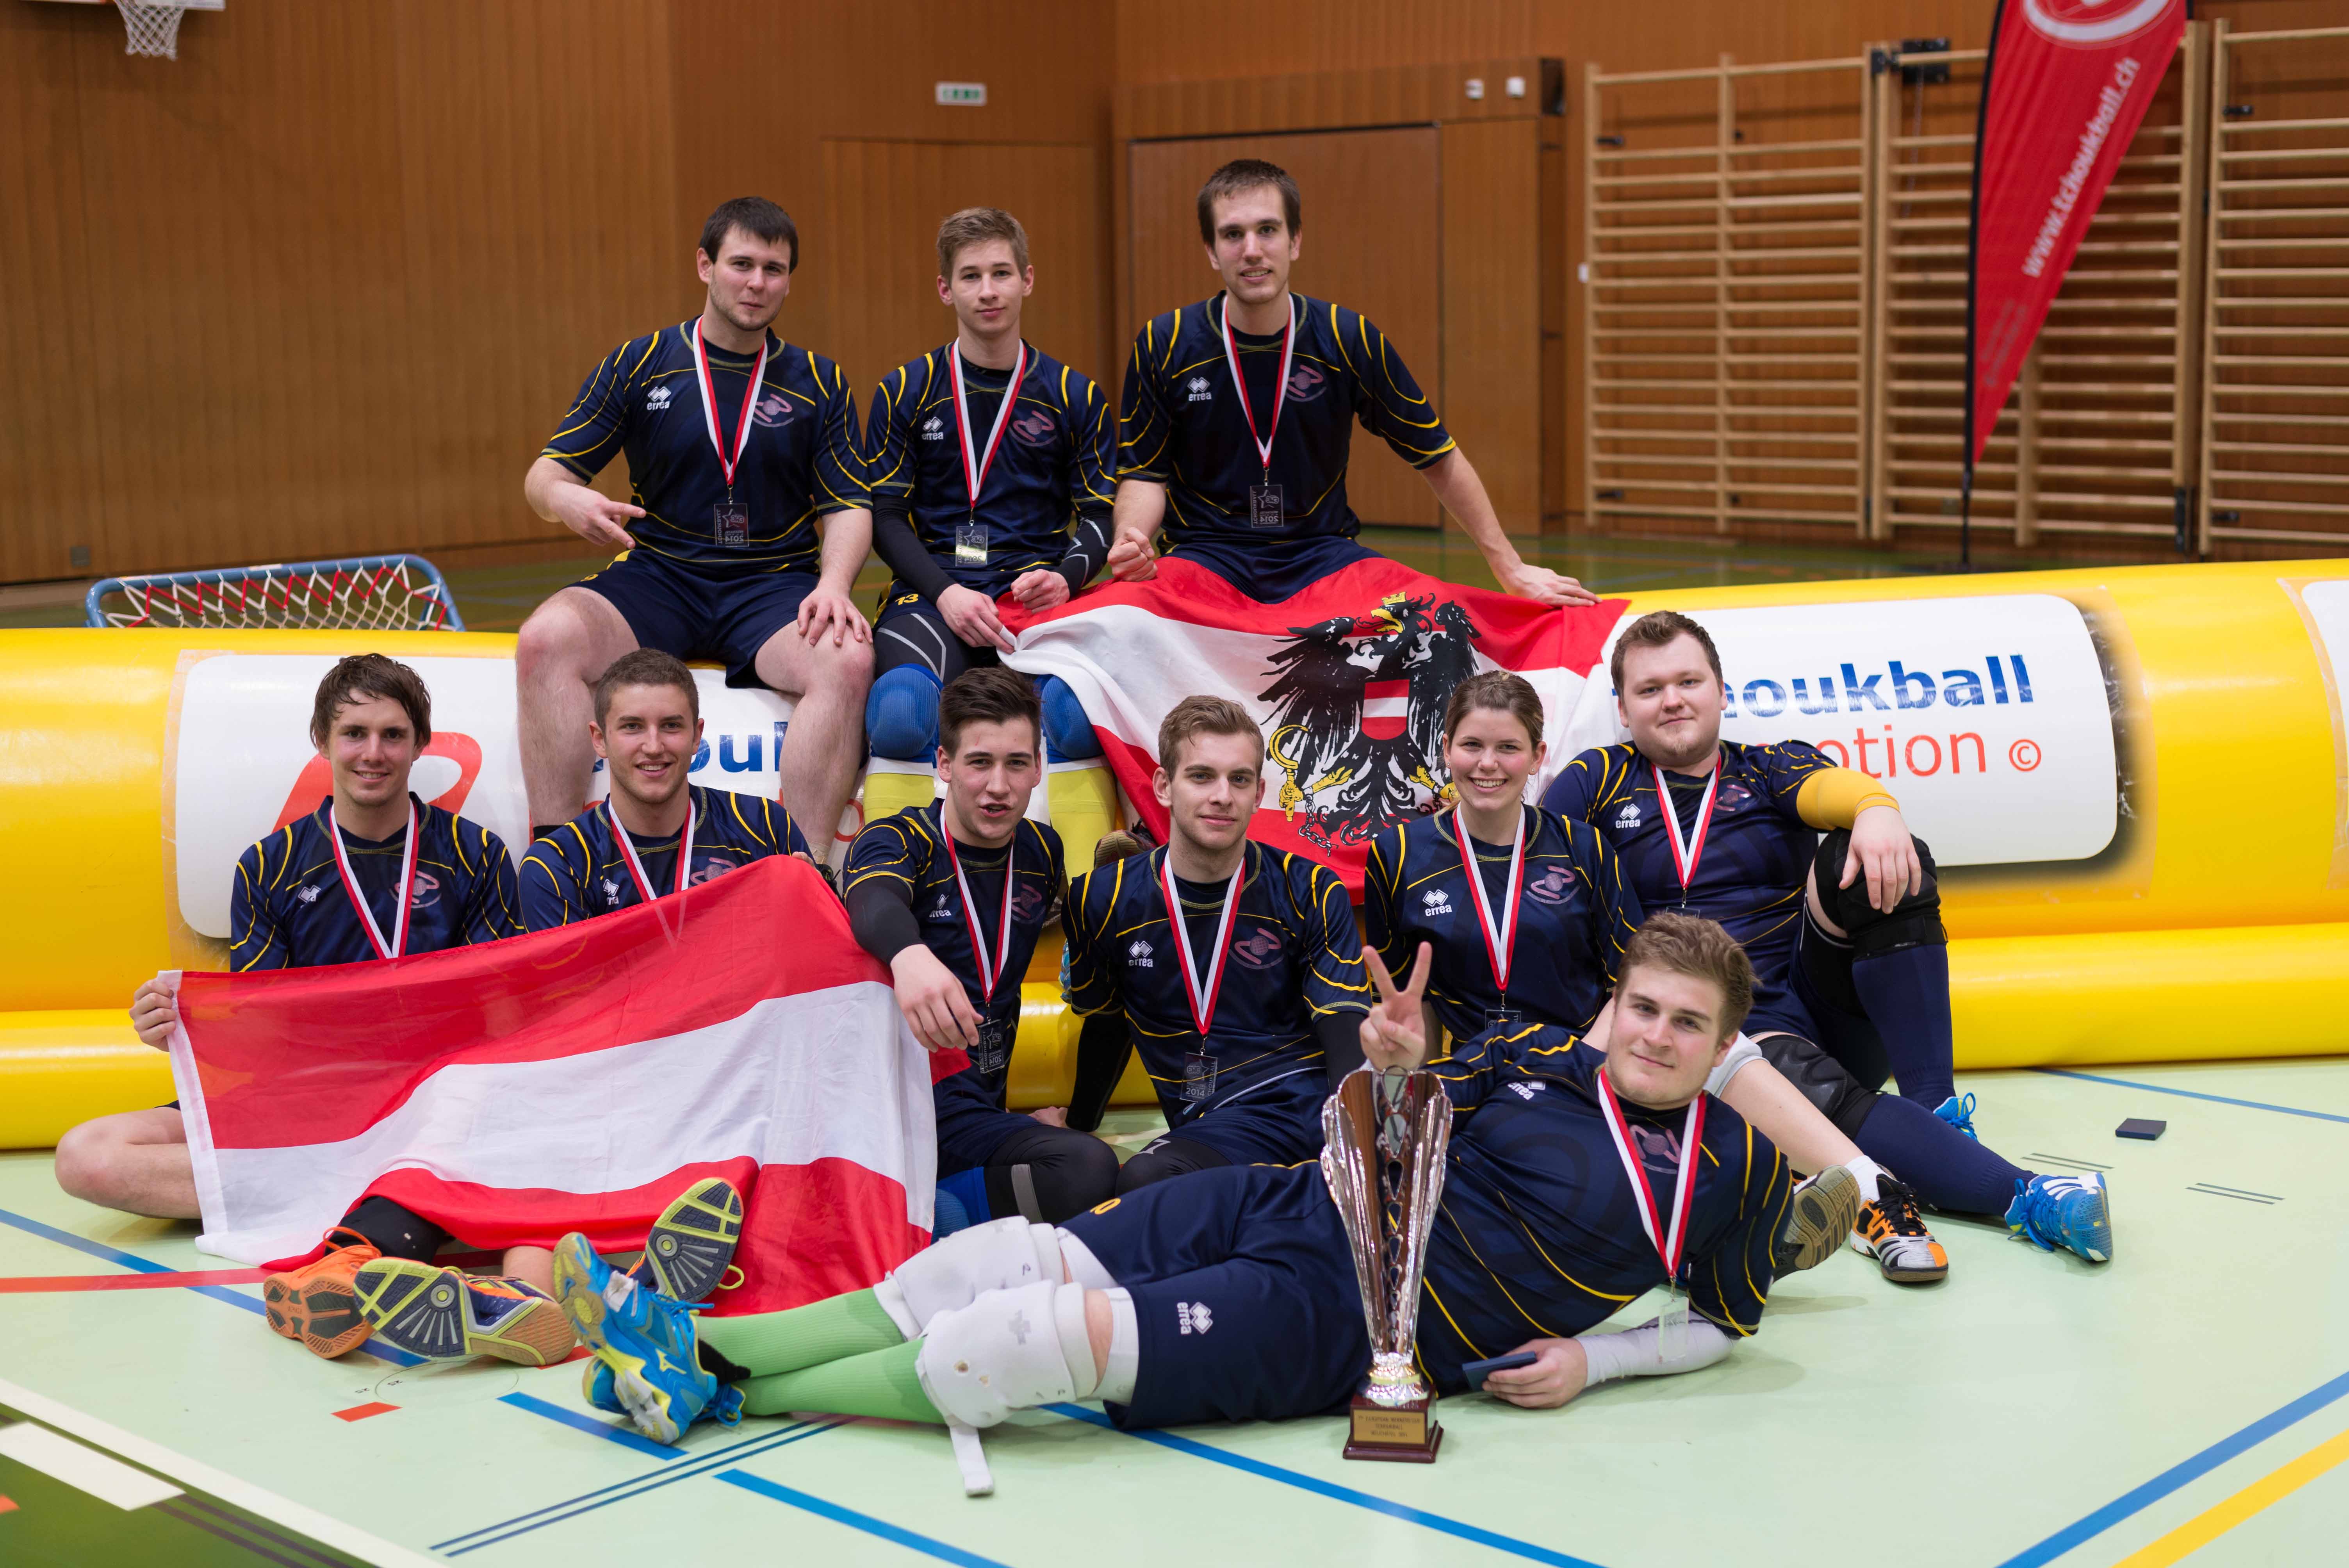 European Champion 2014